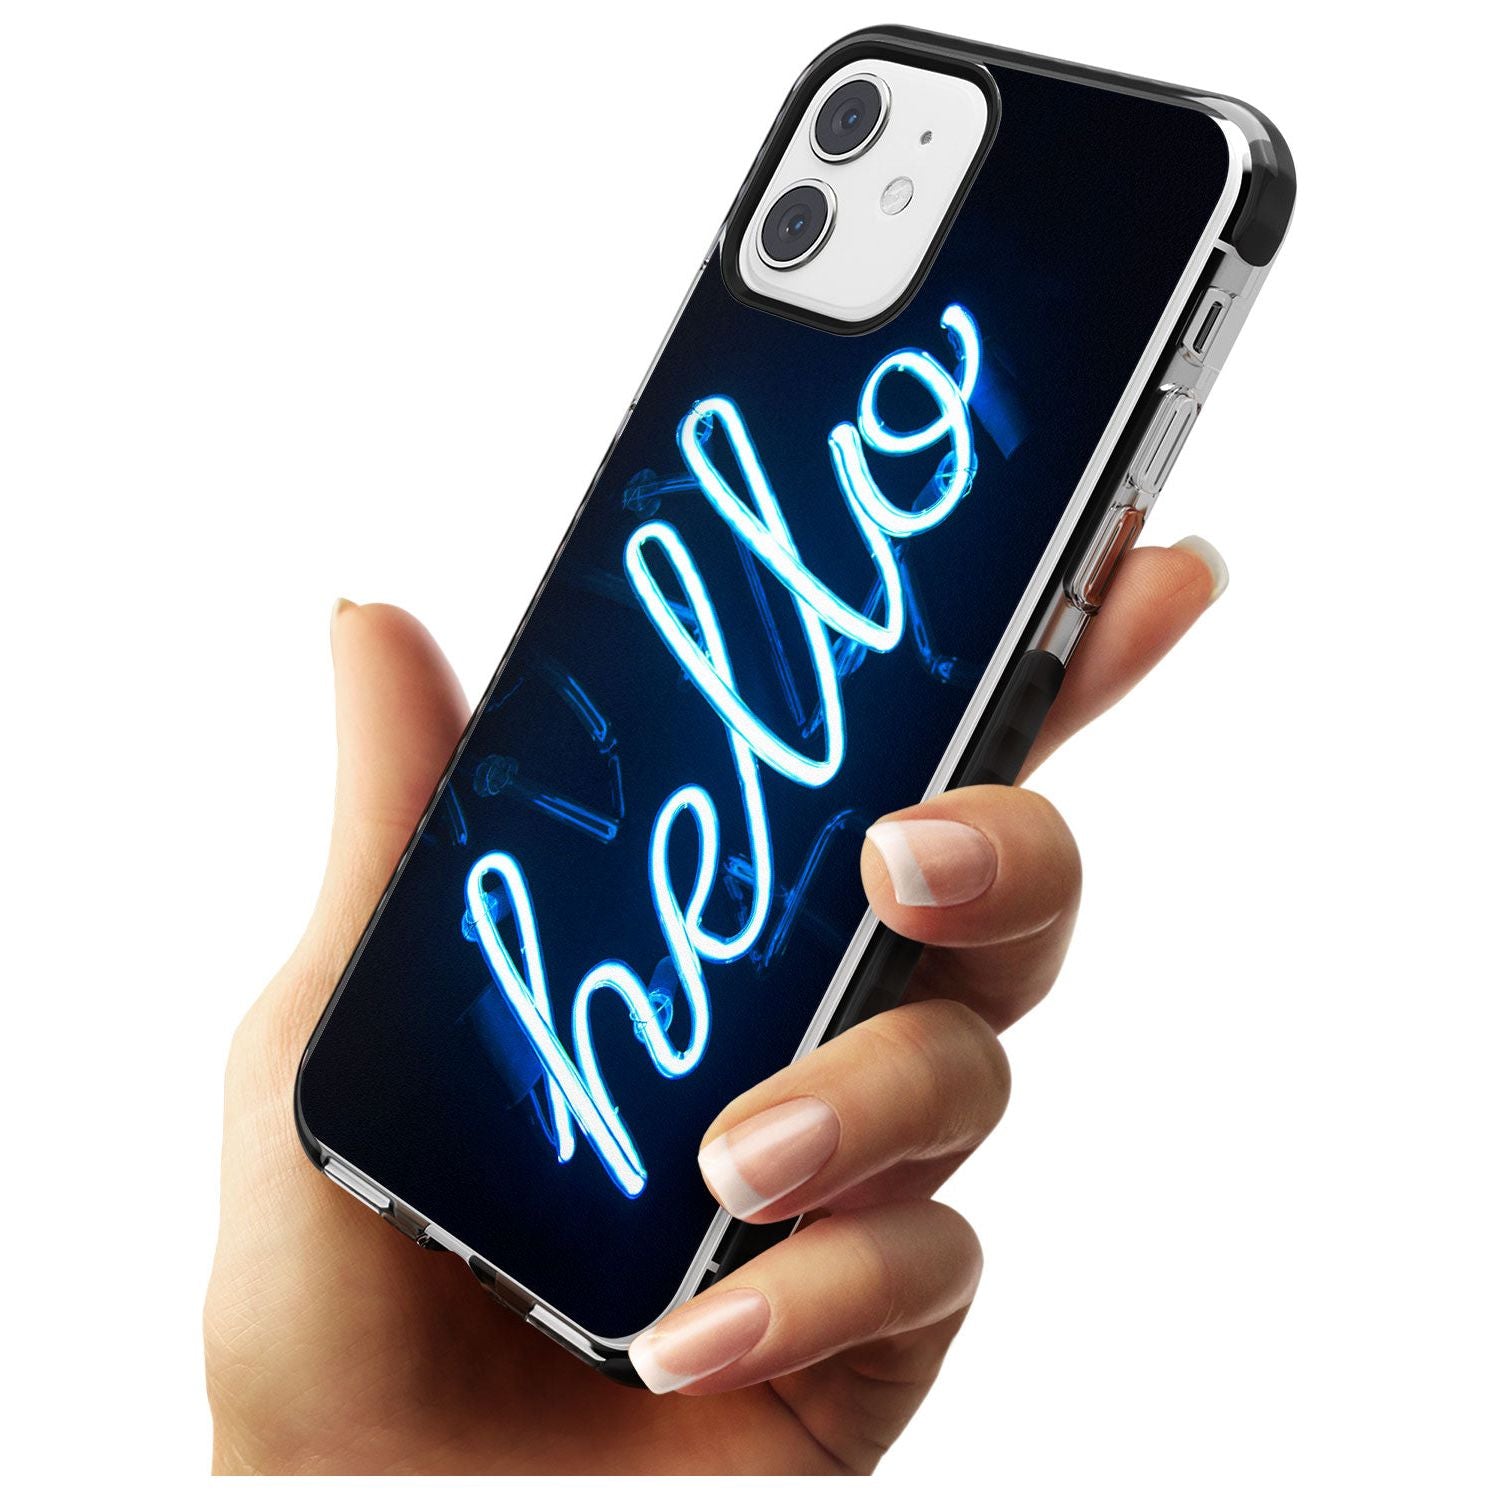 "Hello" Blue Cursive Neon Sign Black Impact Phone Case for iPhone 11